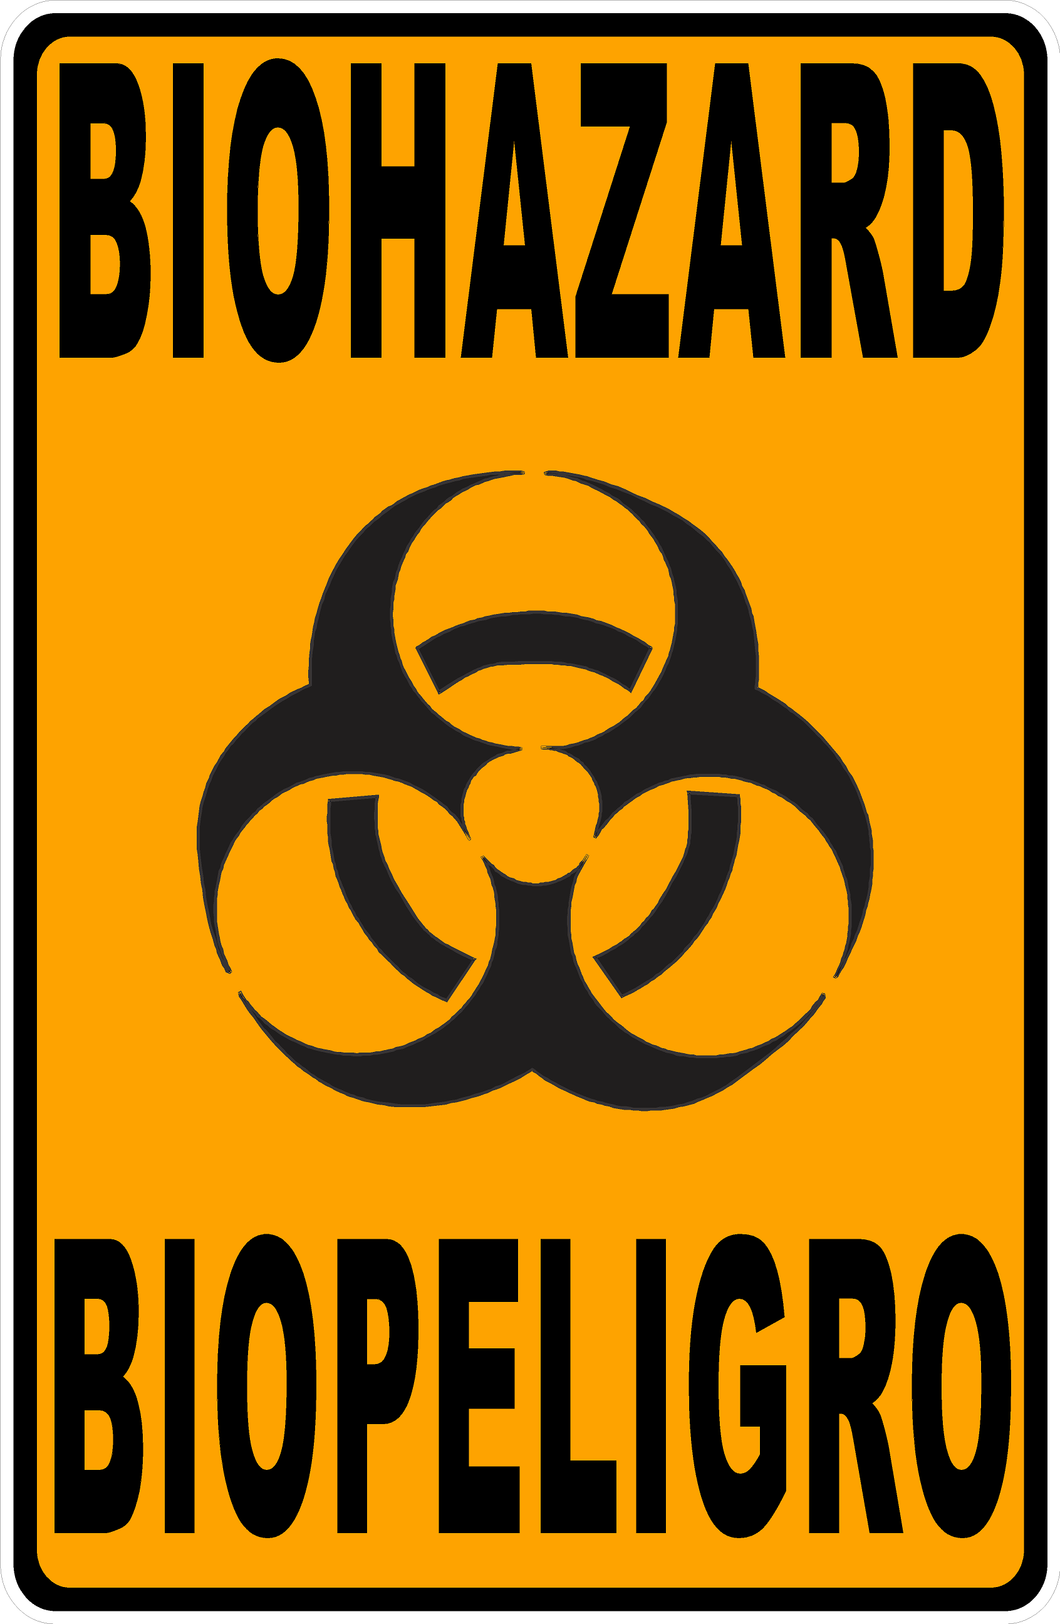 Biohazard Bilingual Sign